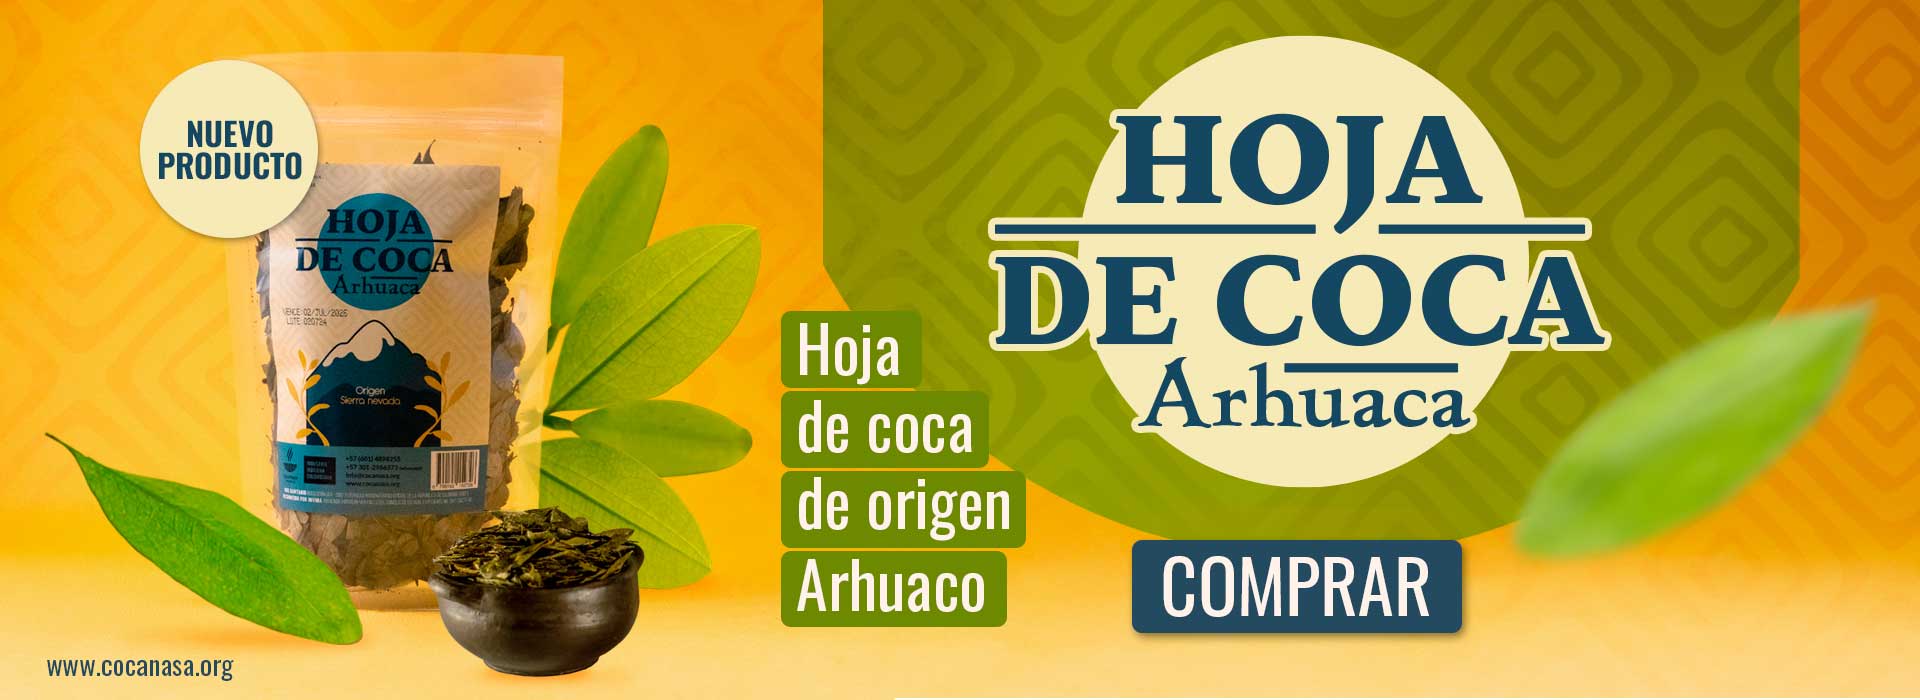 Hoja-de-coca-Arhuaca---WebPc-2